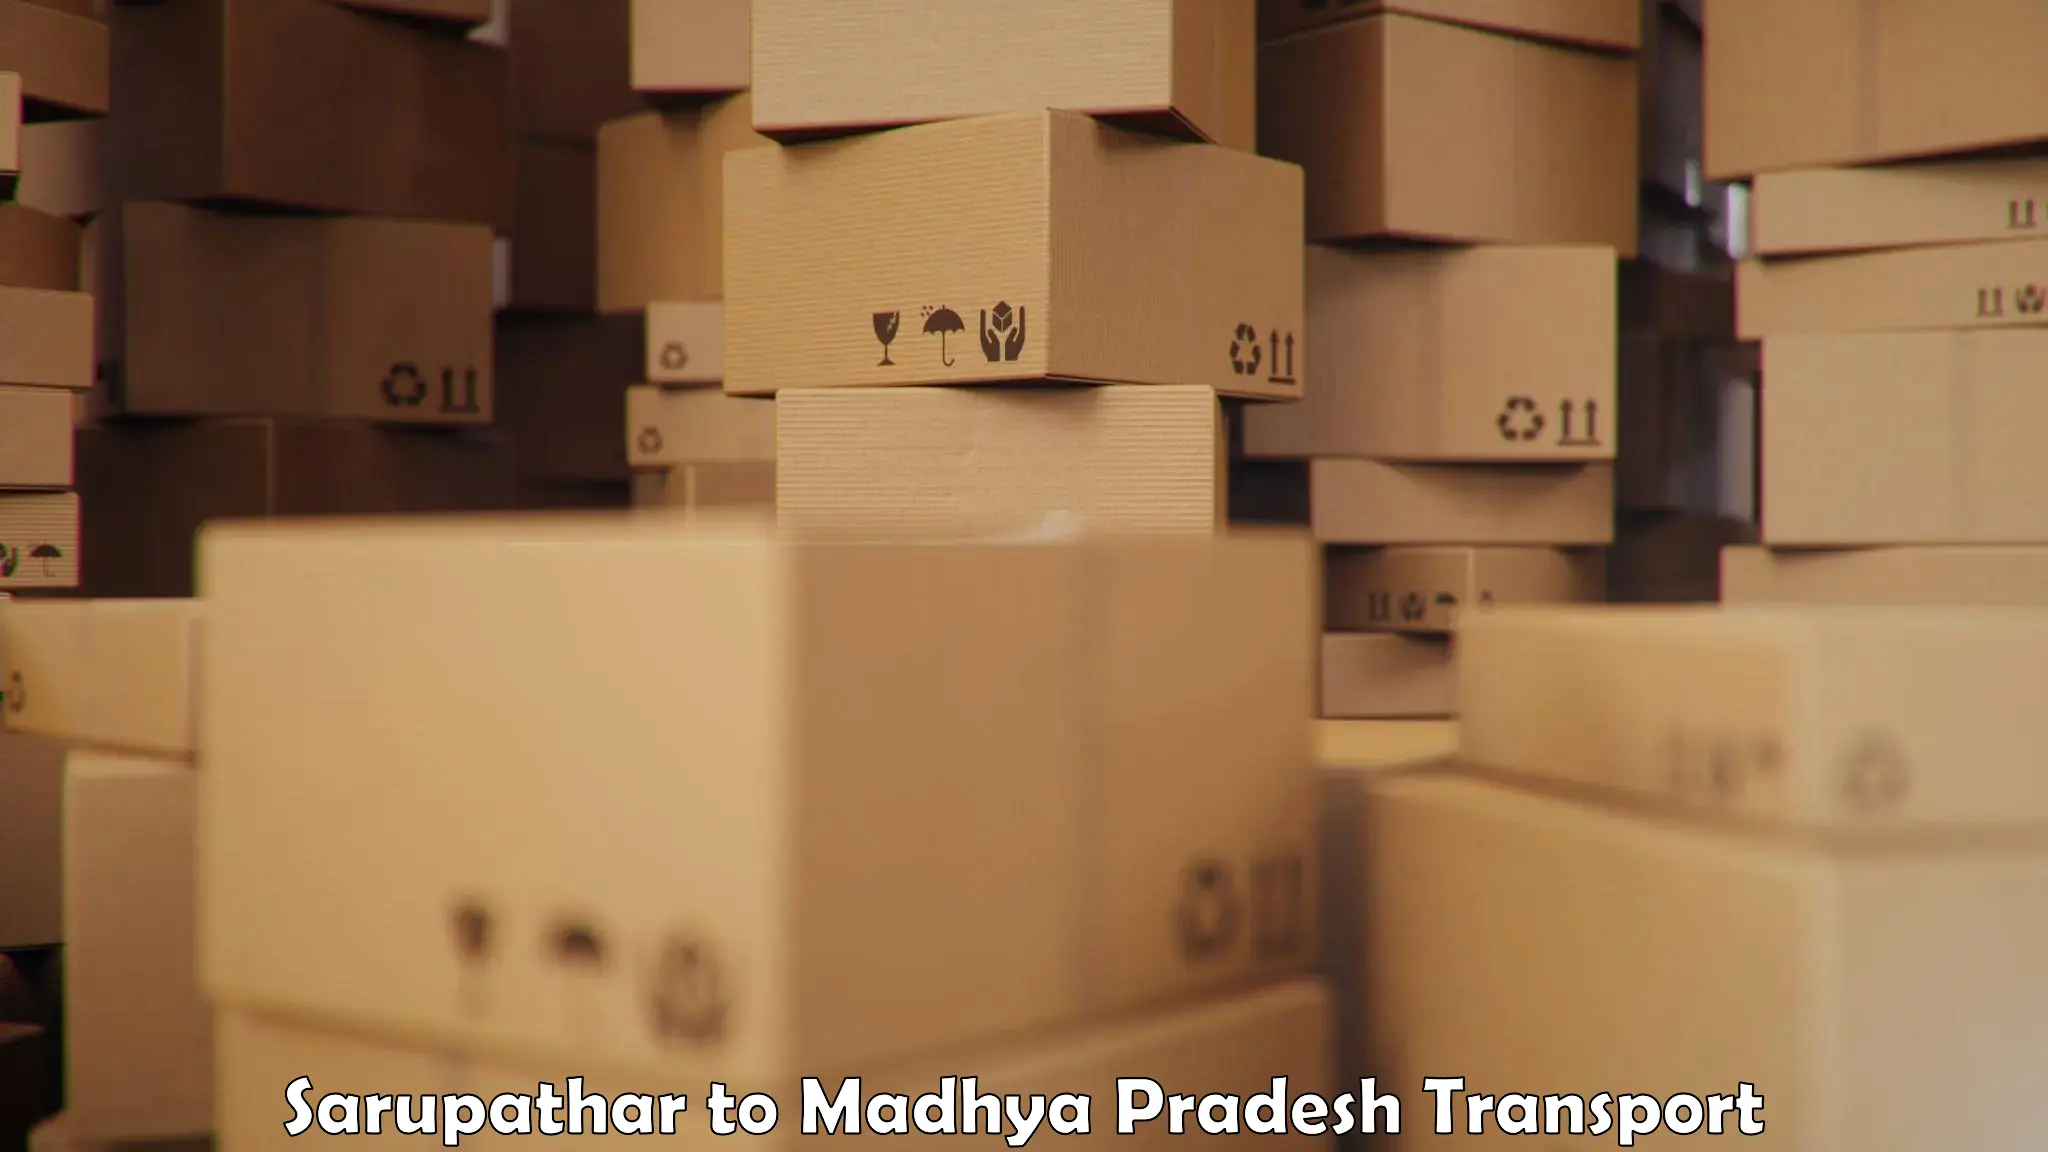 Shipping partner Sarupathar to Mandla